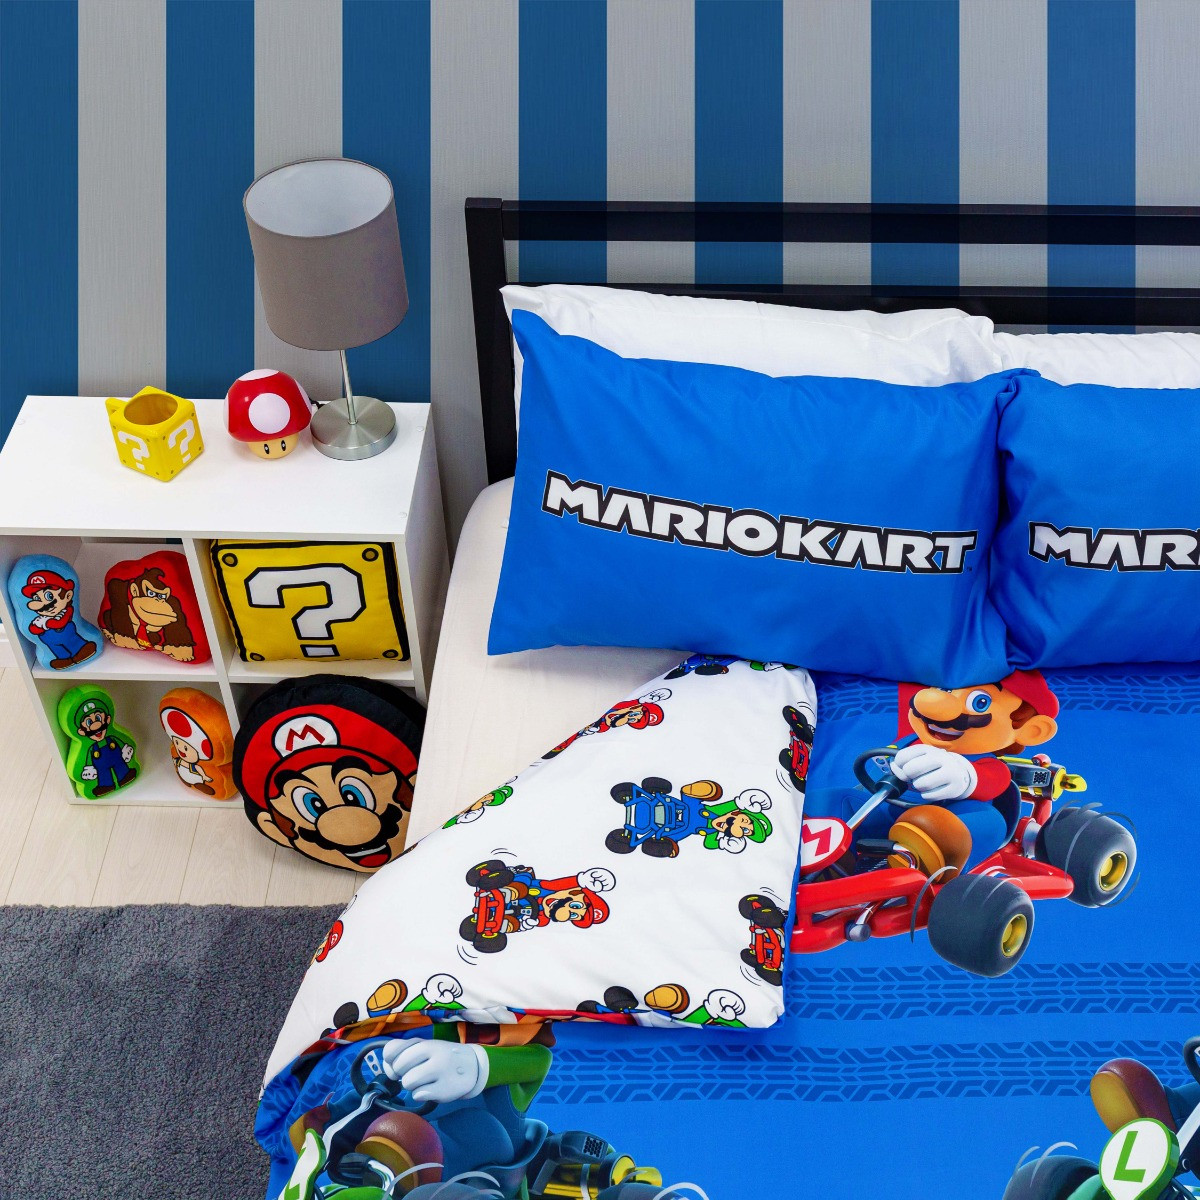 Nintendo Mario Kart Checkers Duvet Set, Blue - Double>